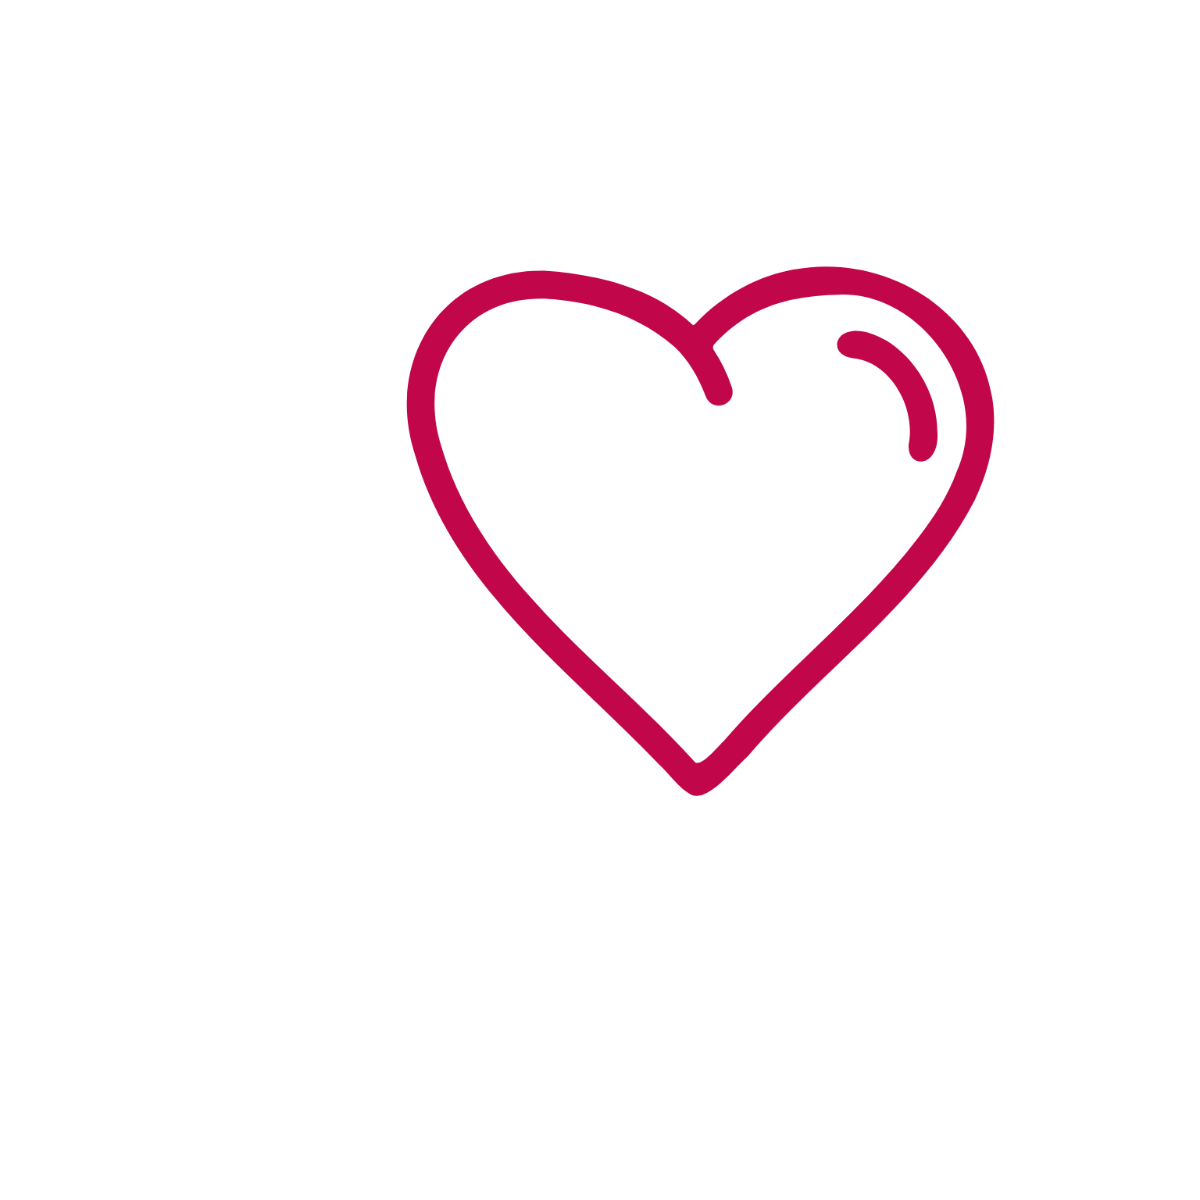 FREE Heart Vector Templates & Examples - Edit Online & Download